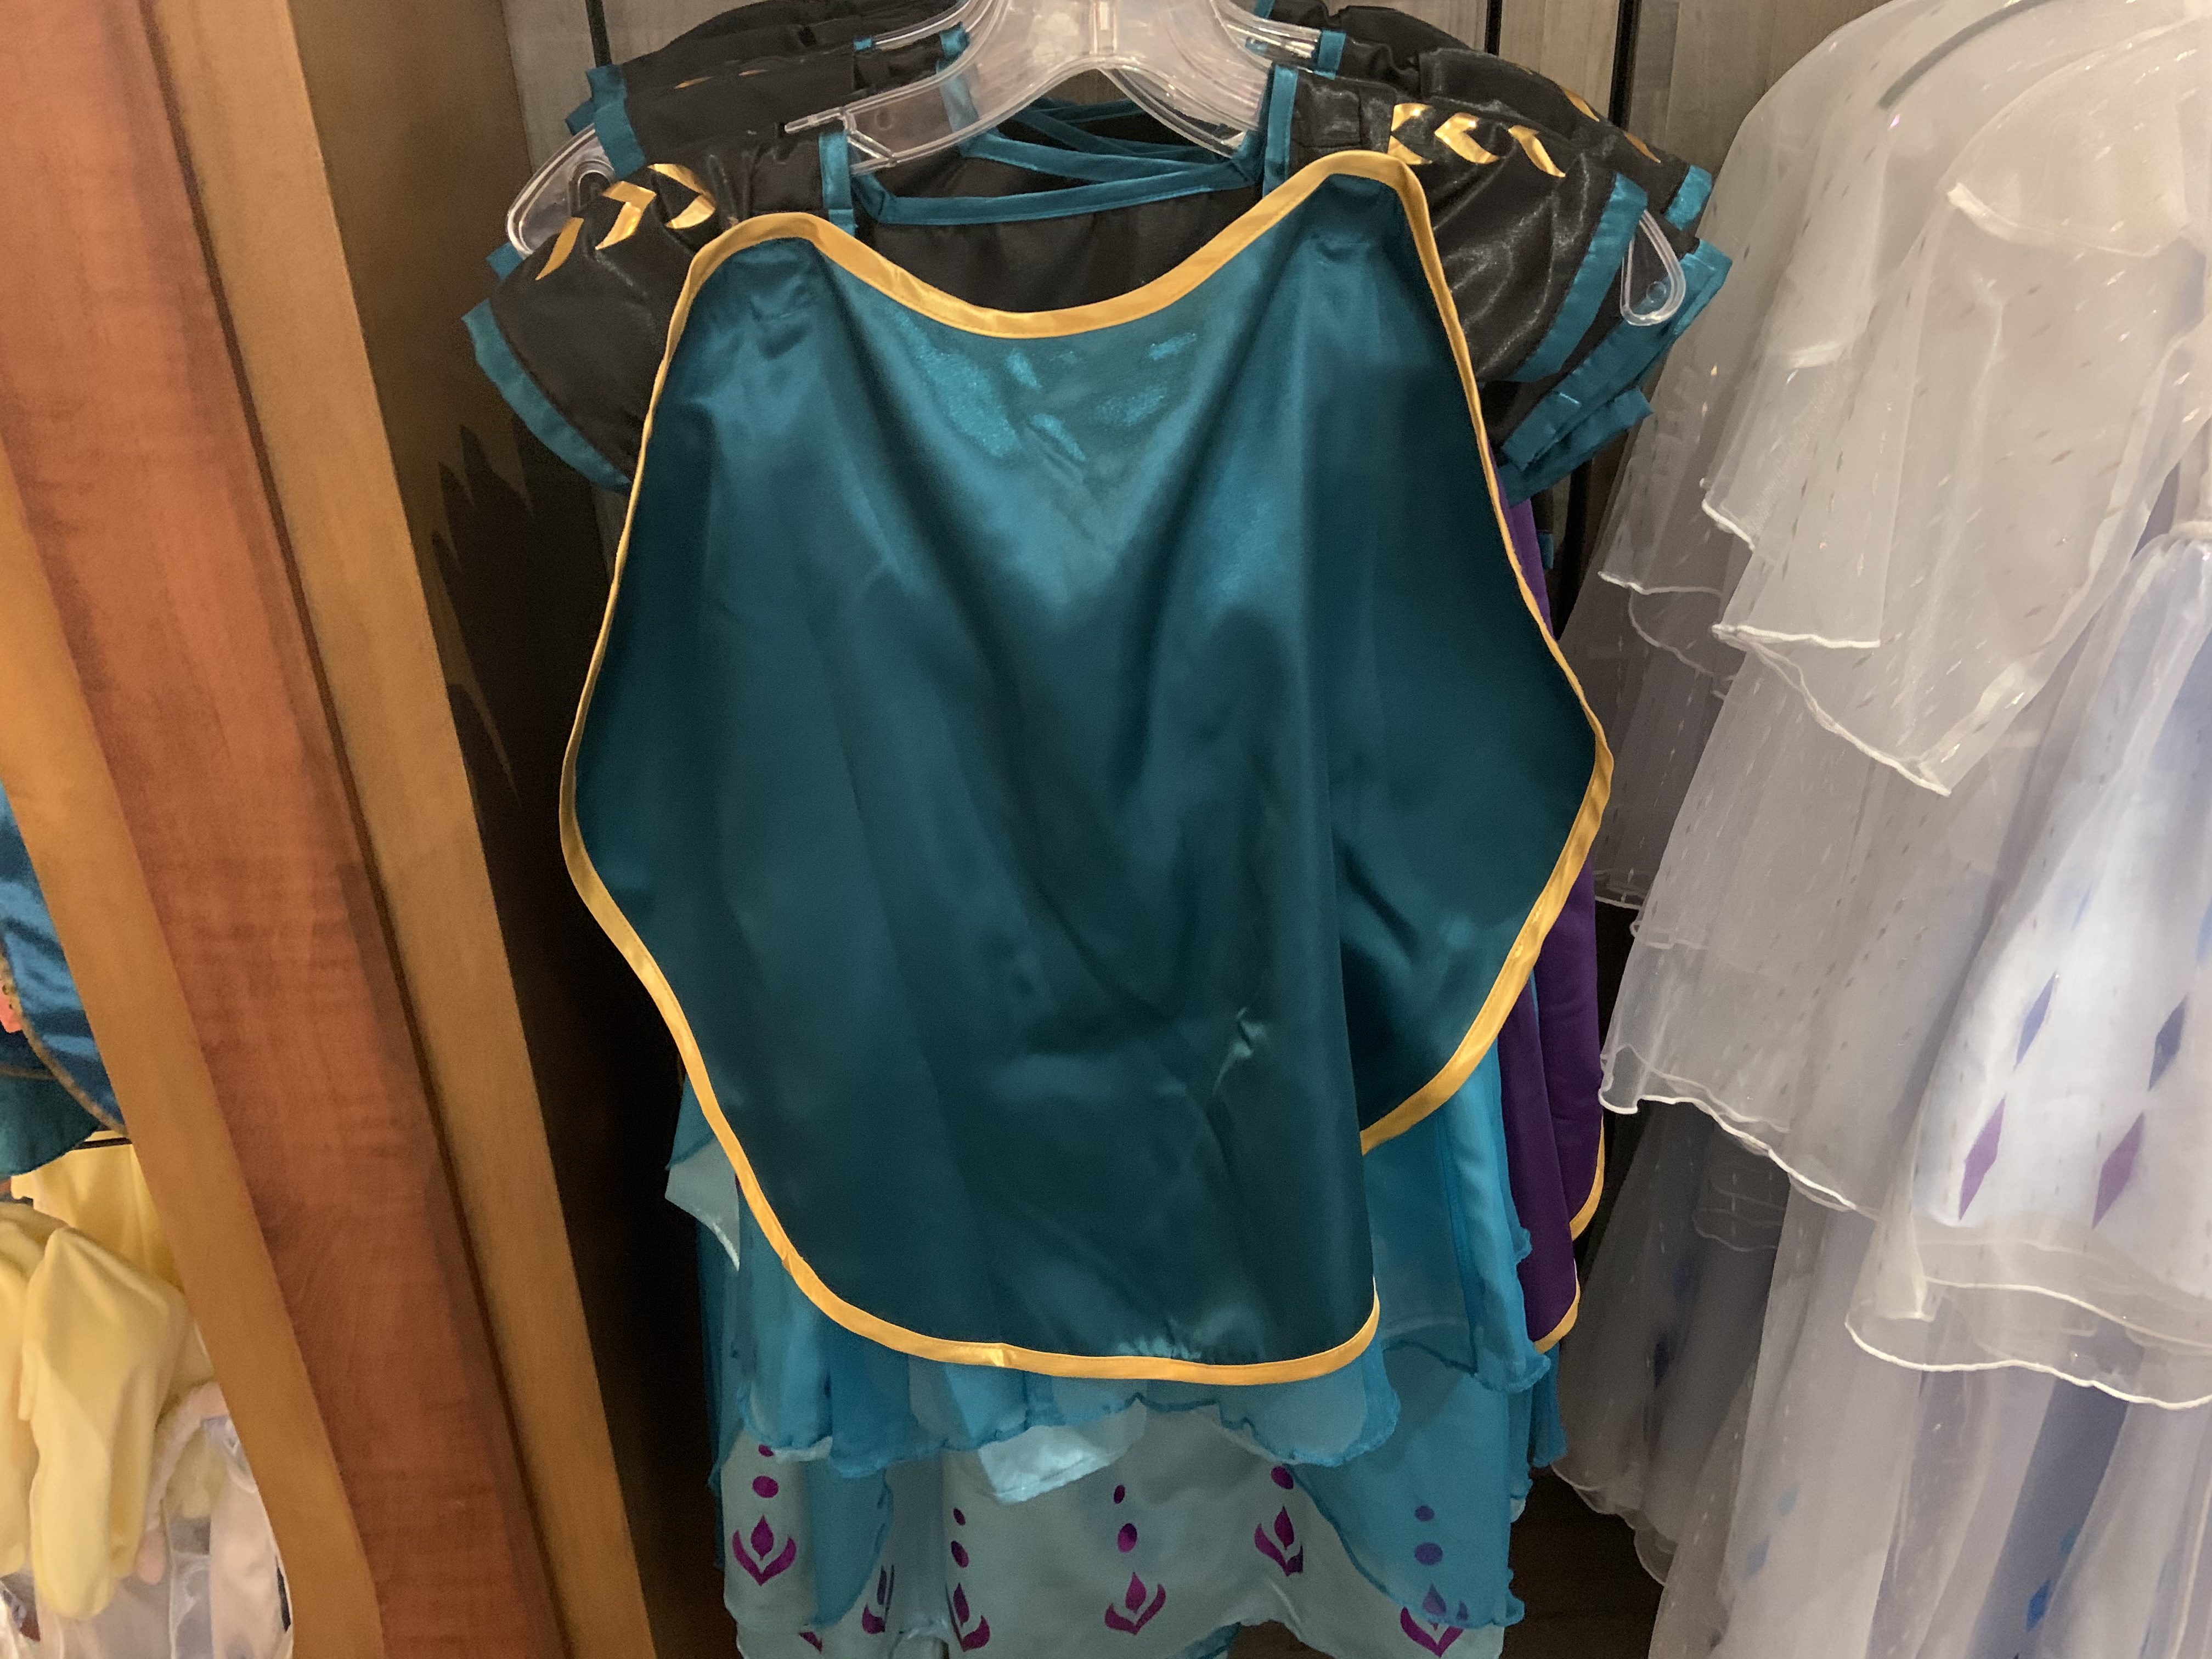 New Anna dress 12/19/19 5